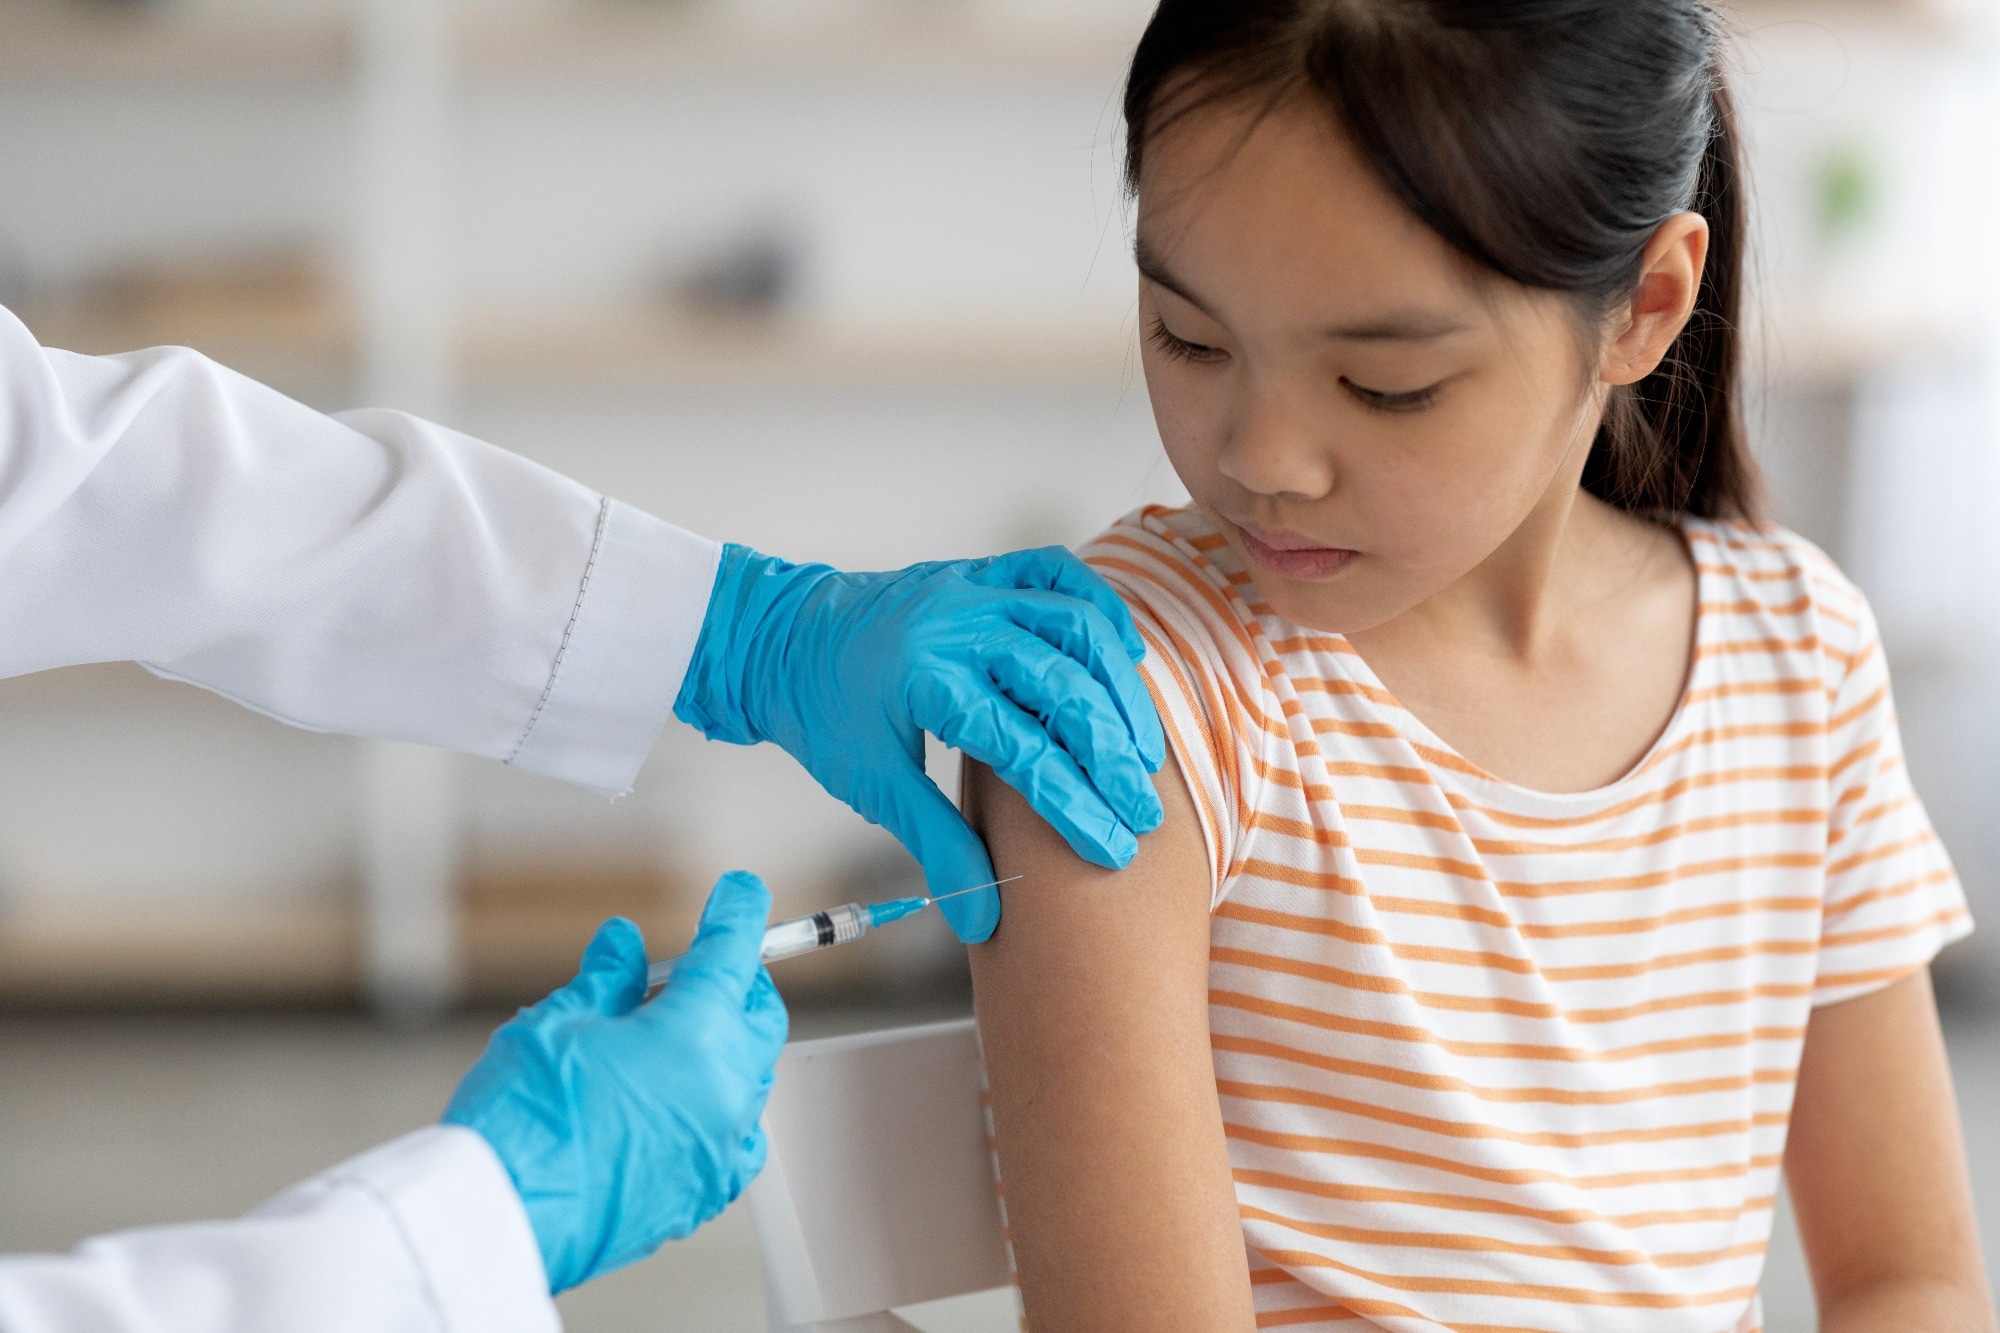 Study: Vaccine effectiveness against long COVID in children. Image Credit: Prostock-studio / Shutterstock.com